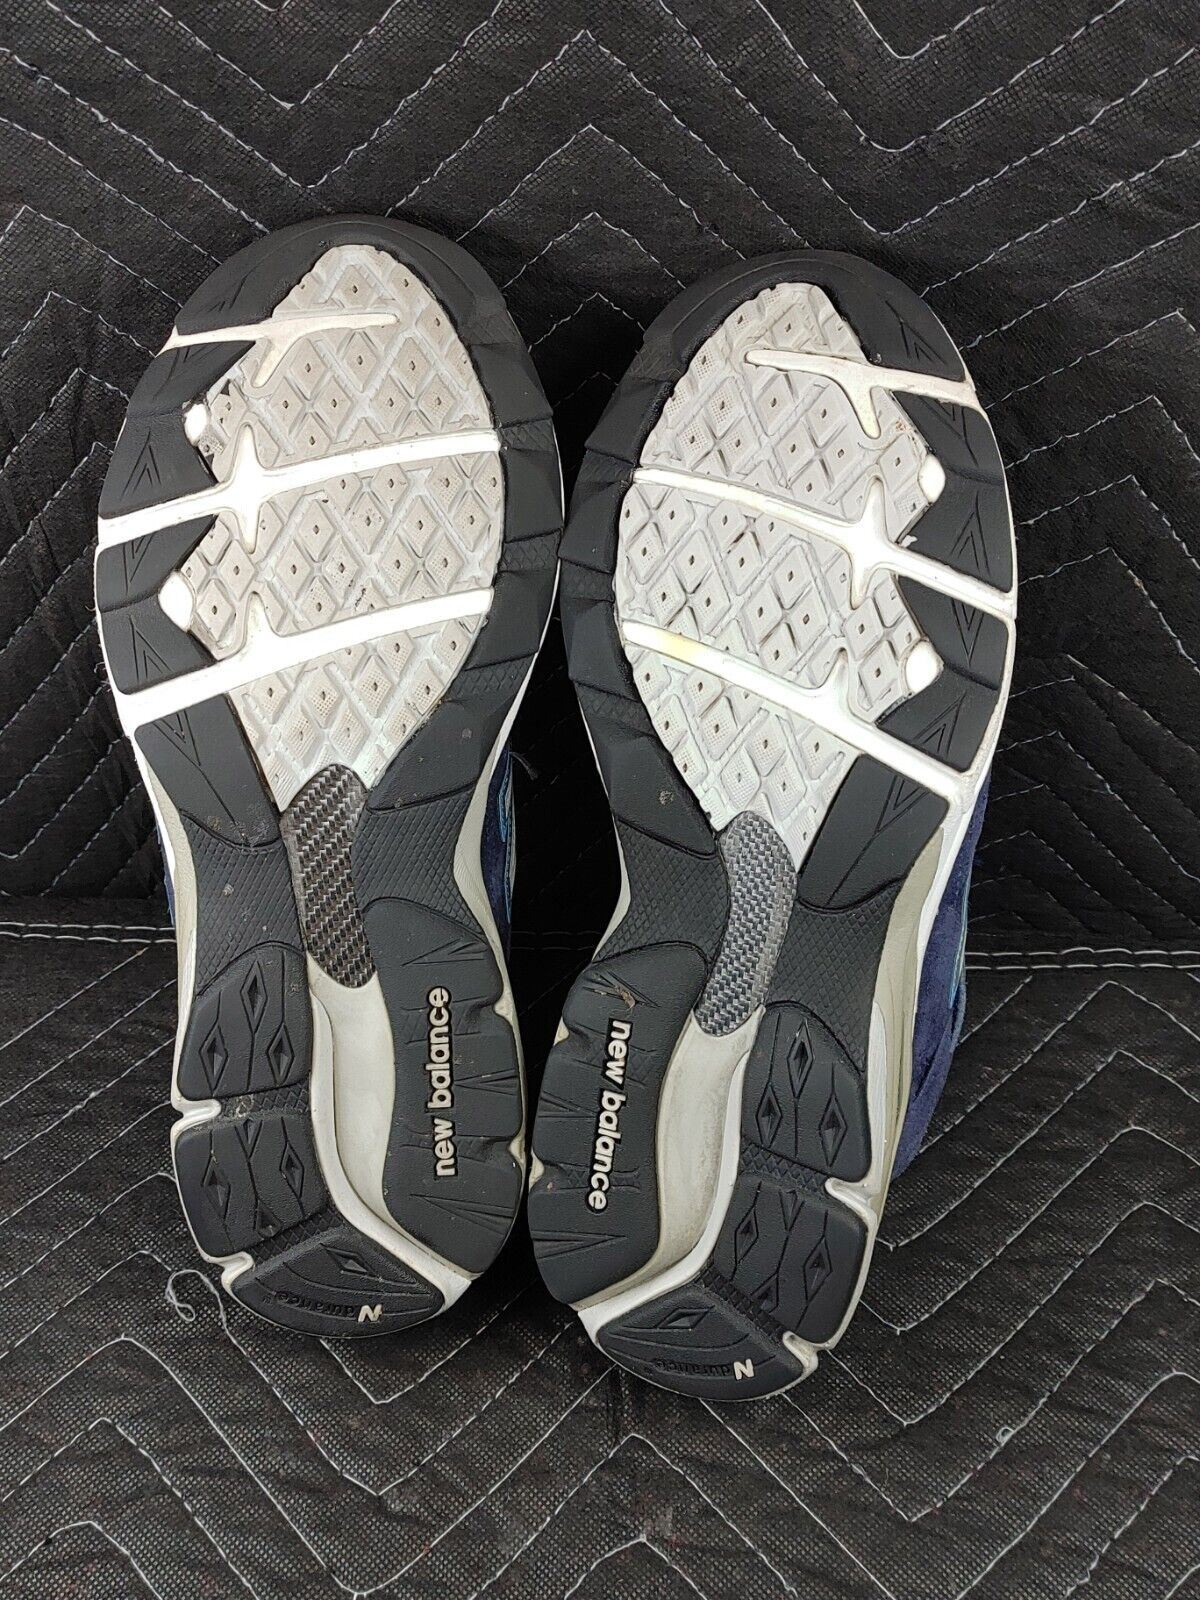 New Balance 990 v3 Heritage USA Running Shoes Women’s Size 9 D Blue Grey W990NV3